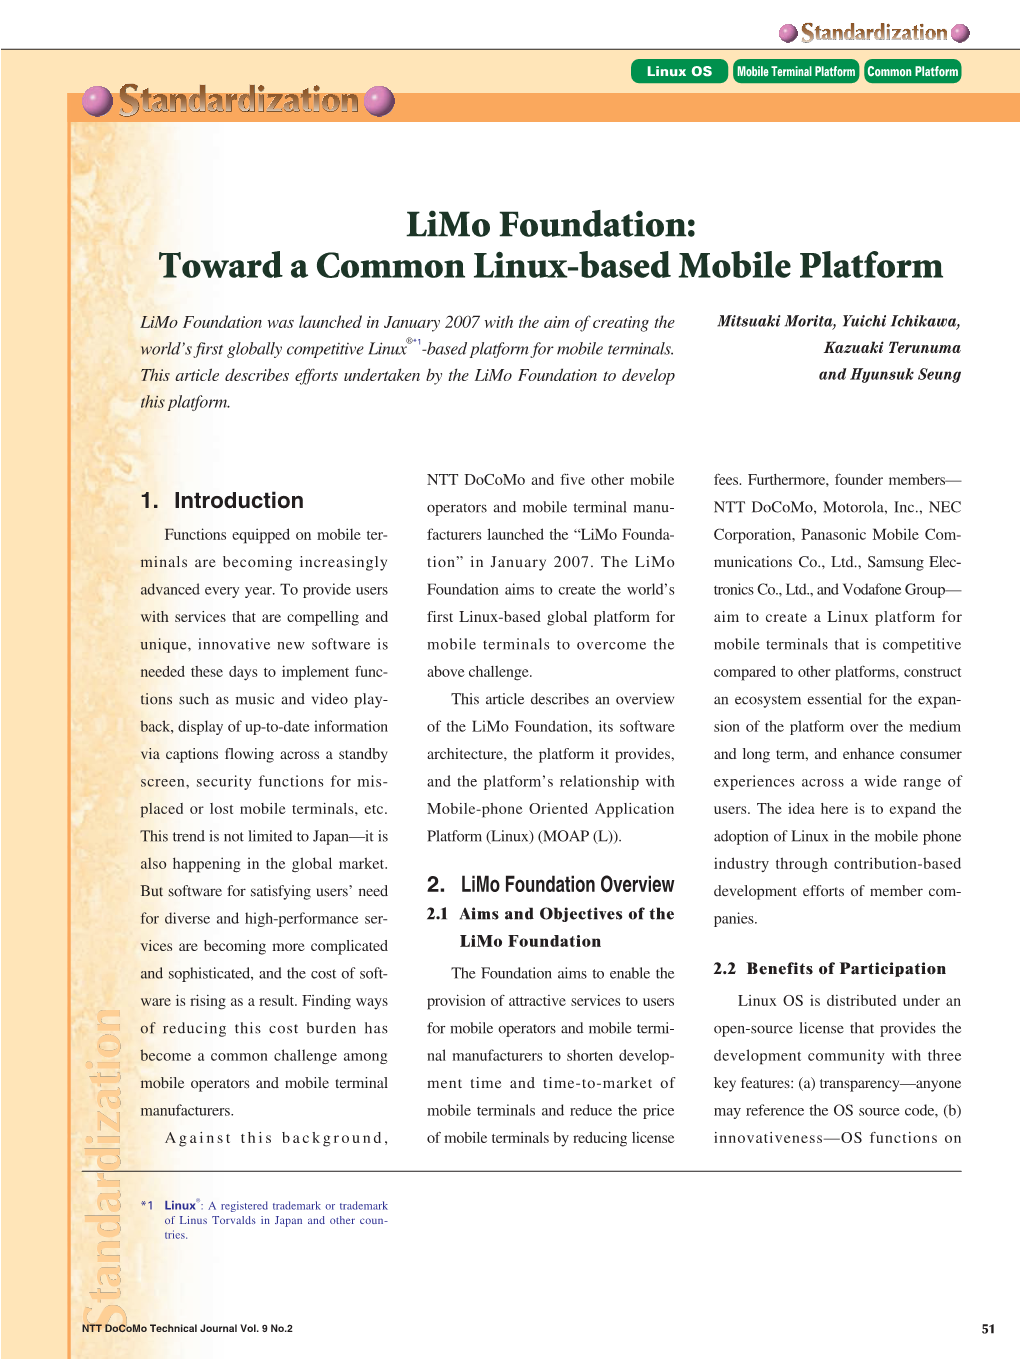 Limo Foundation: Toward a Common Linux-Based Mobile Platform